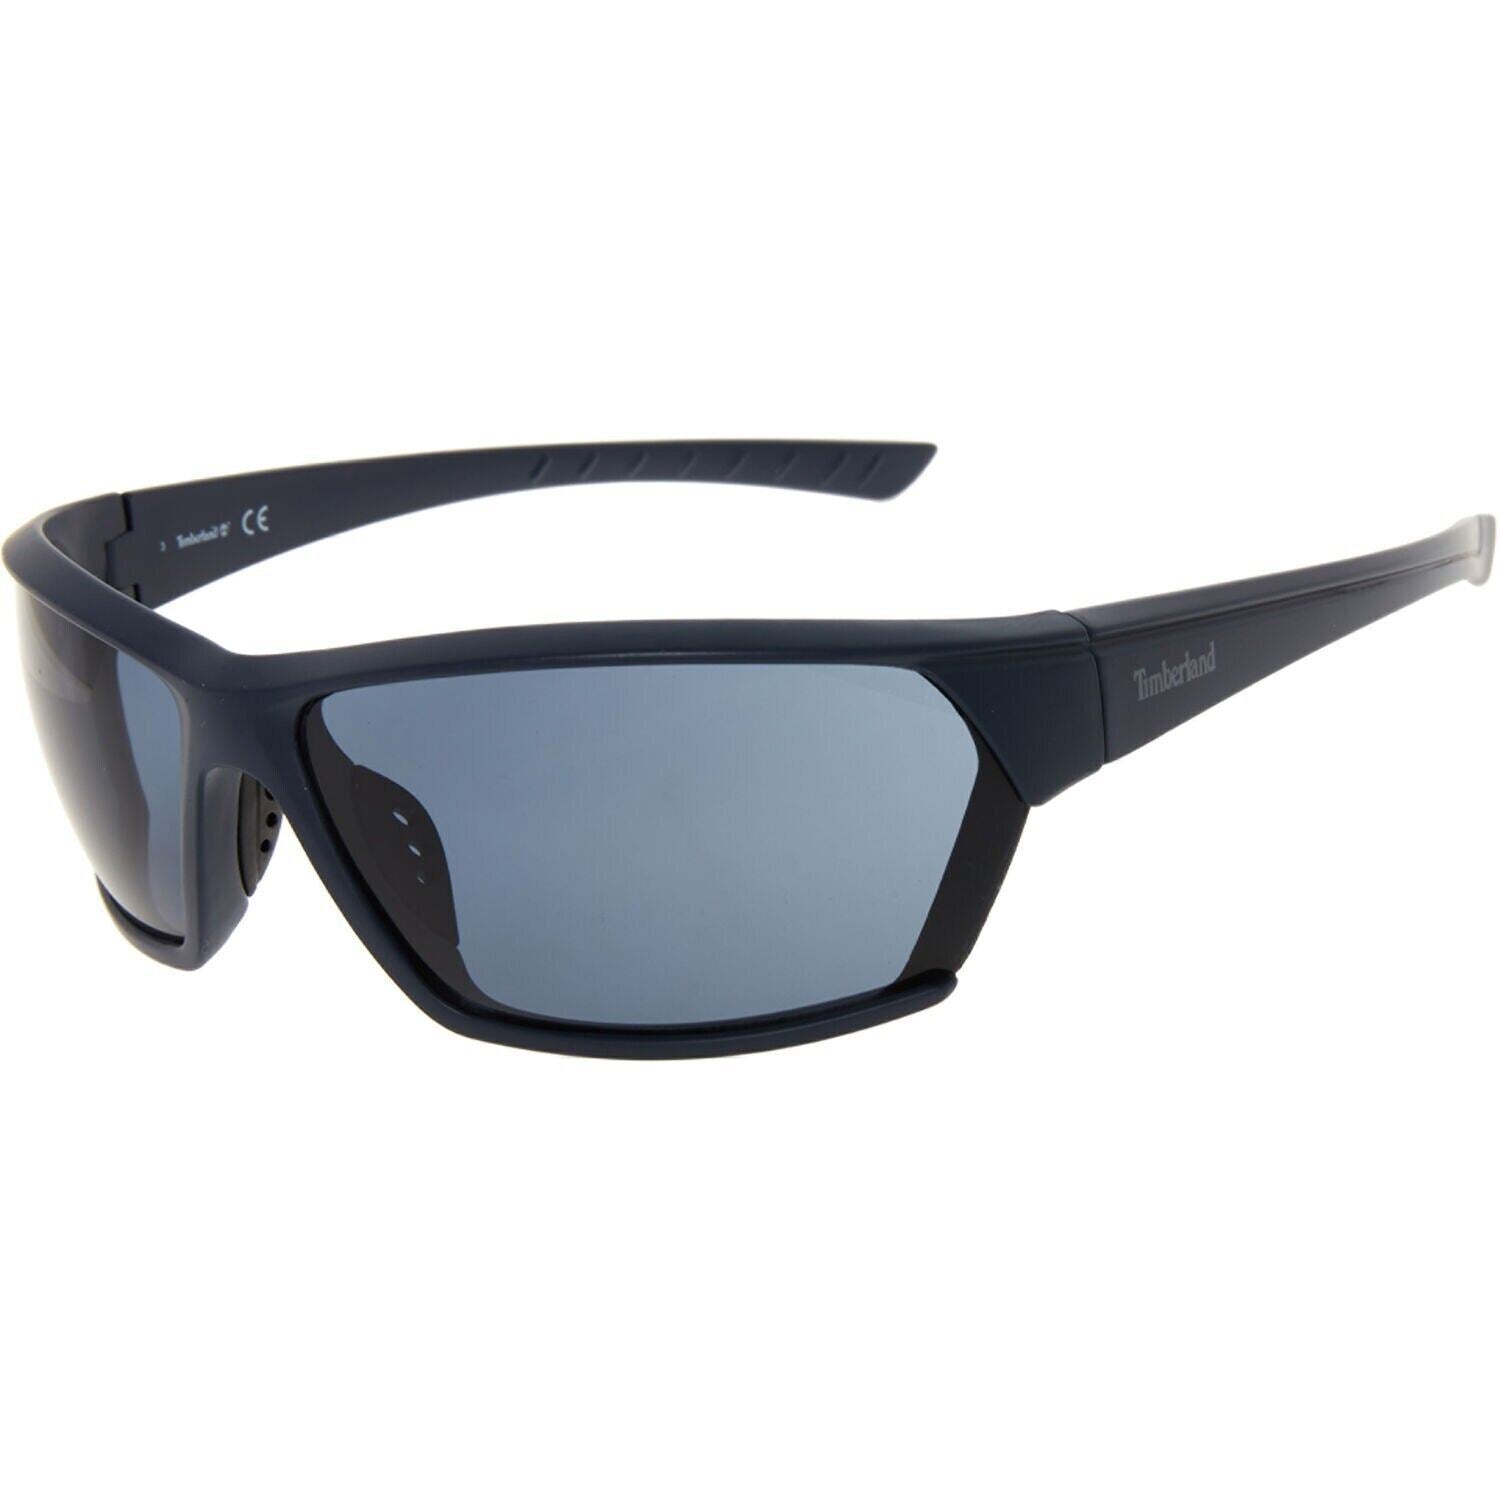 TIMBERLAND Men's Navy Blue Wrap Sunglasses, TB7188